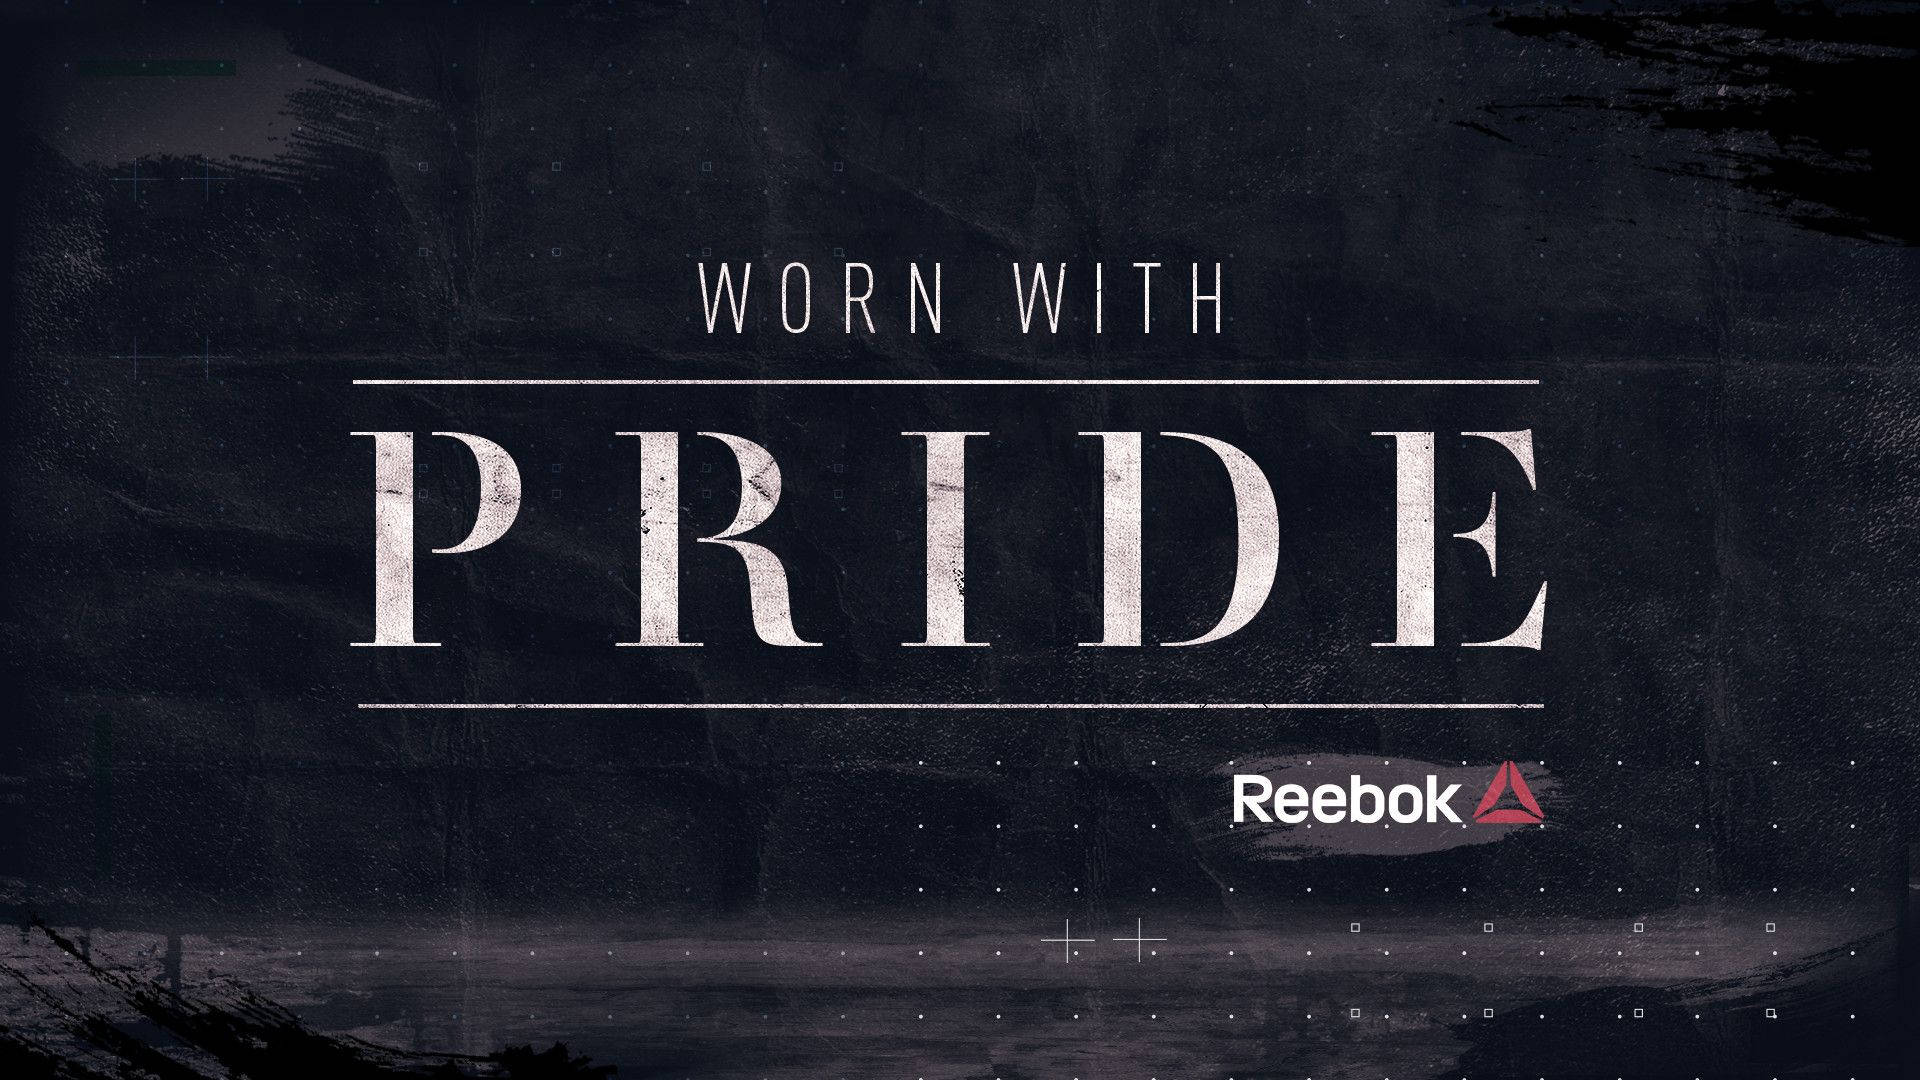 Worn With Pride Reebok Background